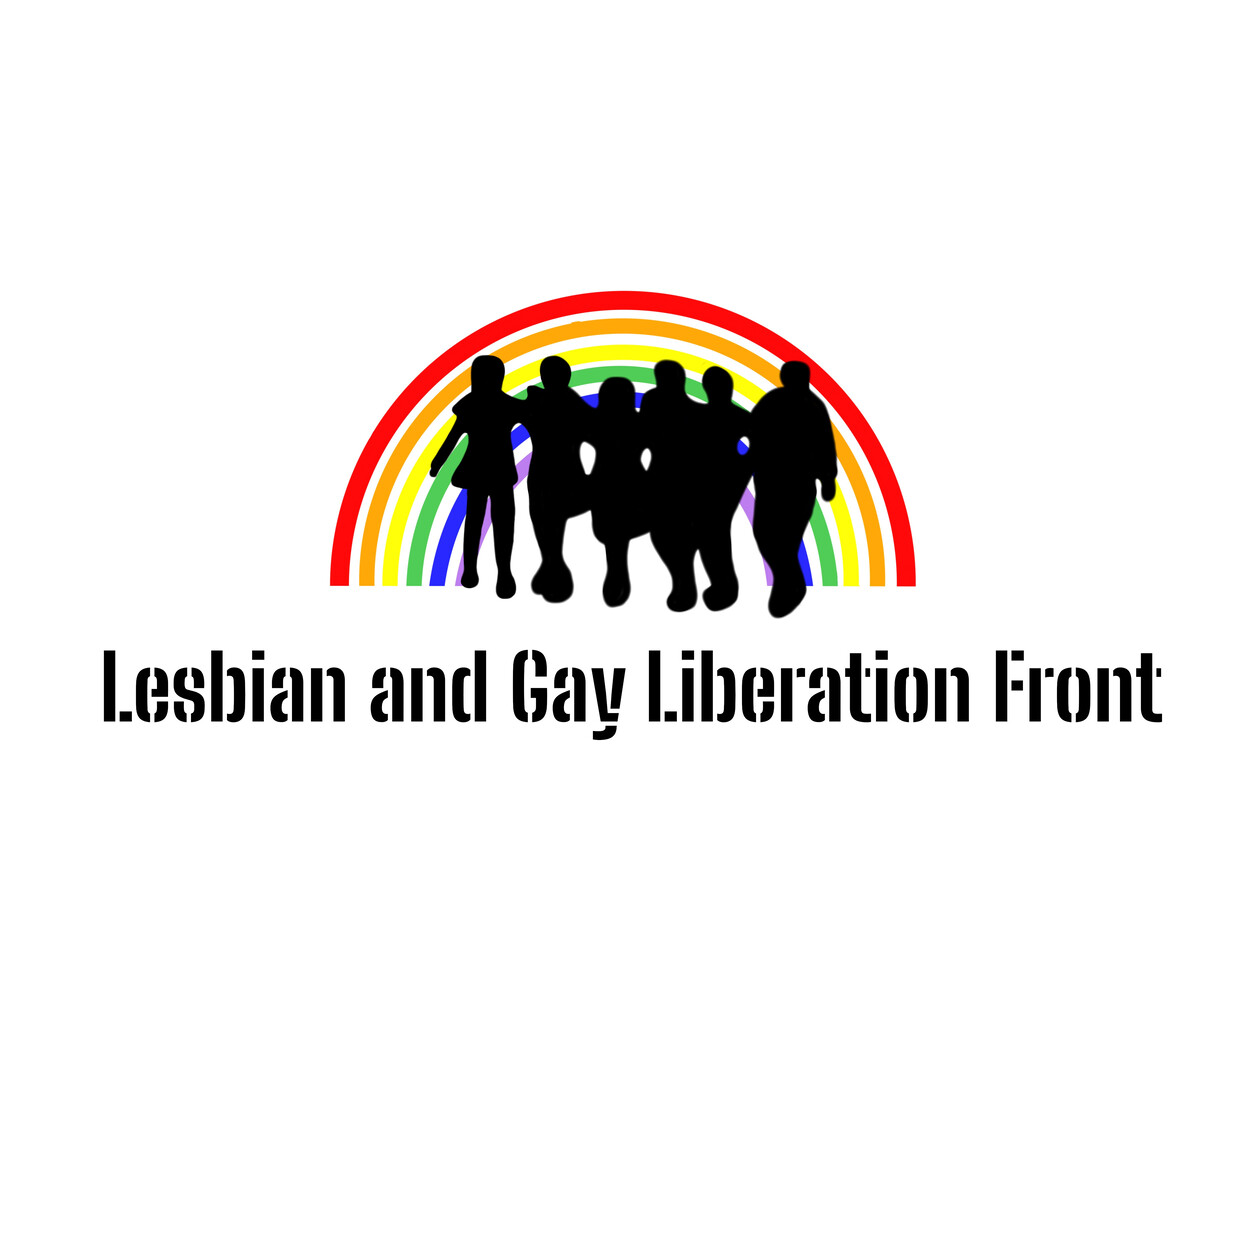 Lesbian and Gay Liberation Front logo